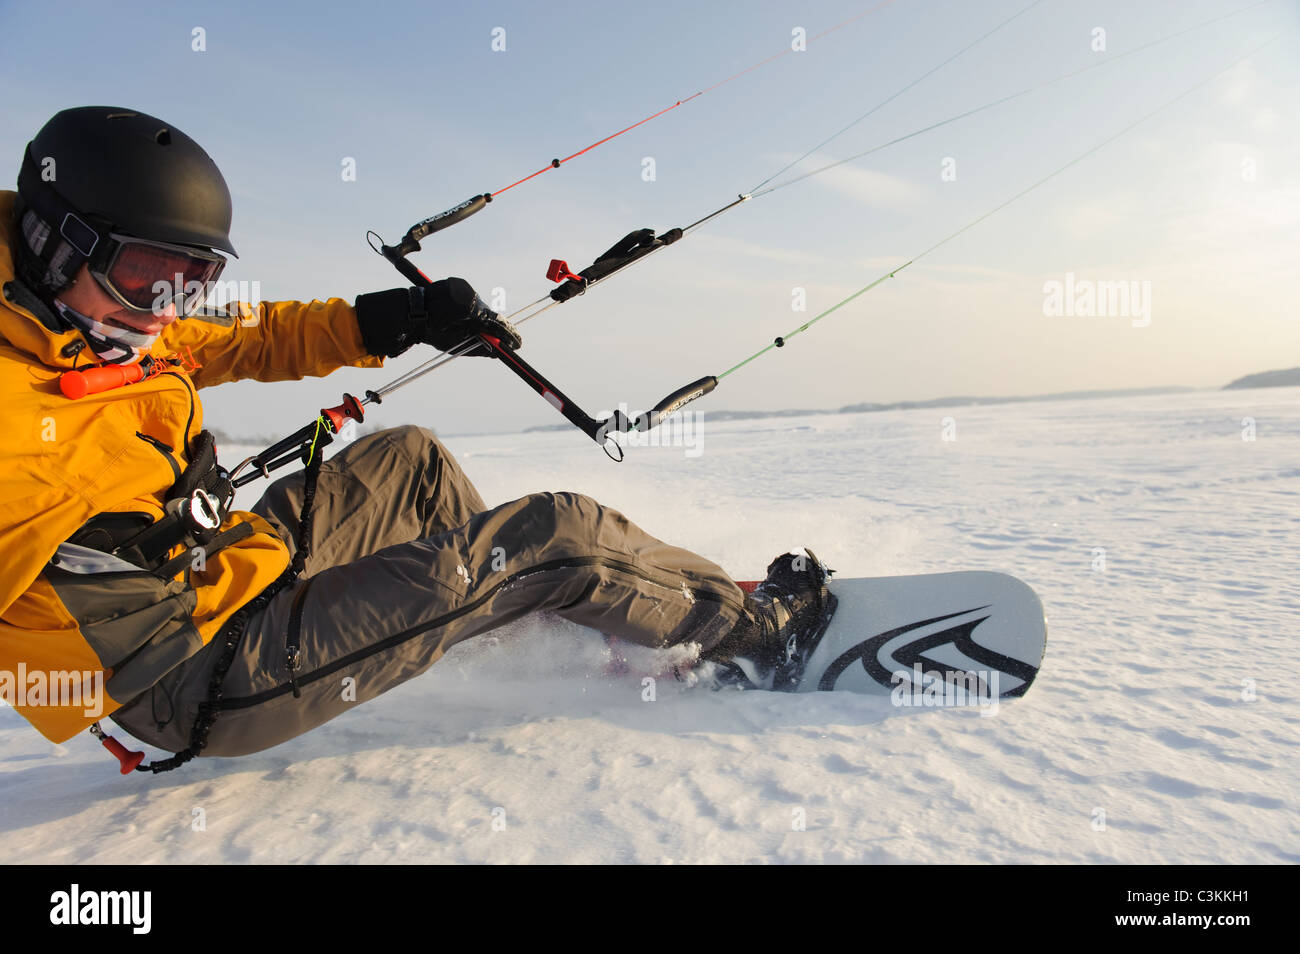 Man kiteboarding in snow Stock Photo